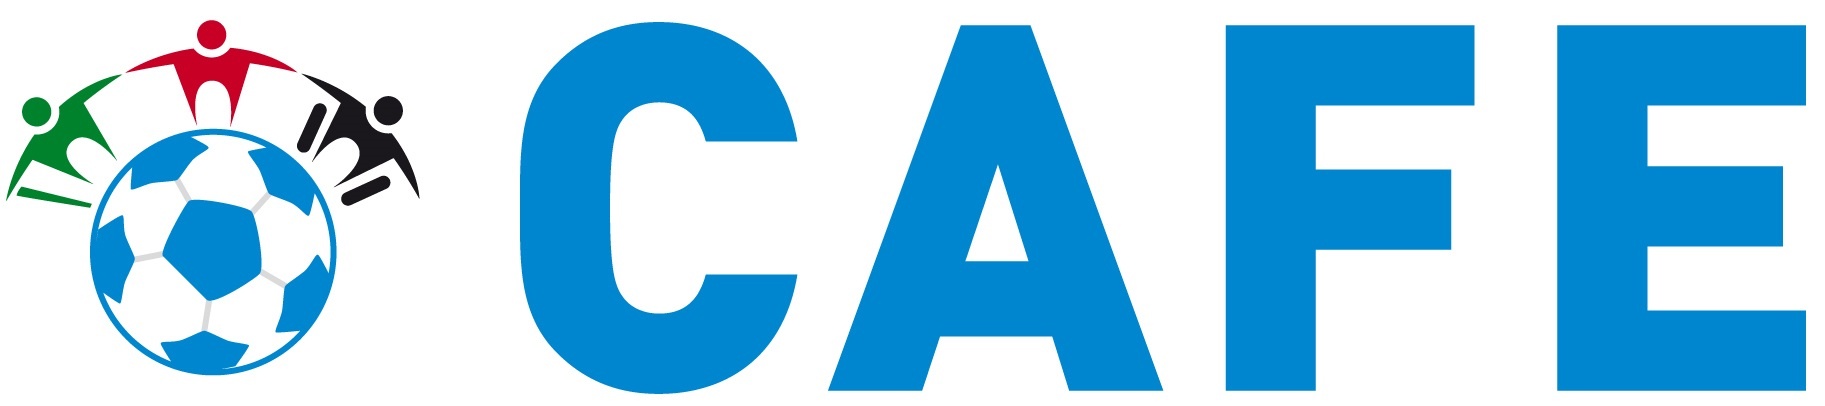 CAFE Logo 2 v2